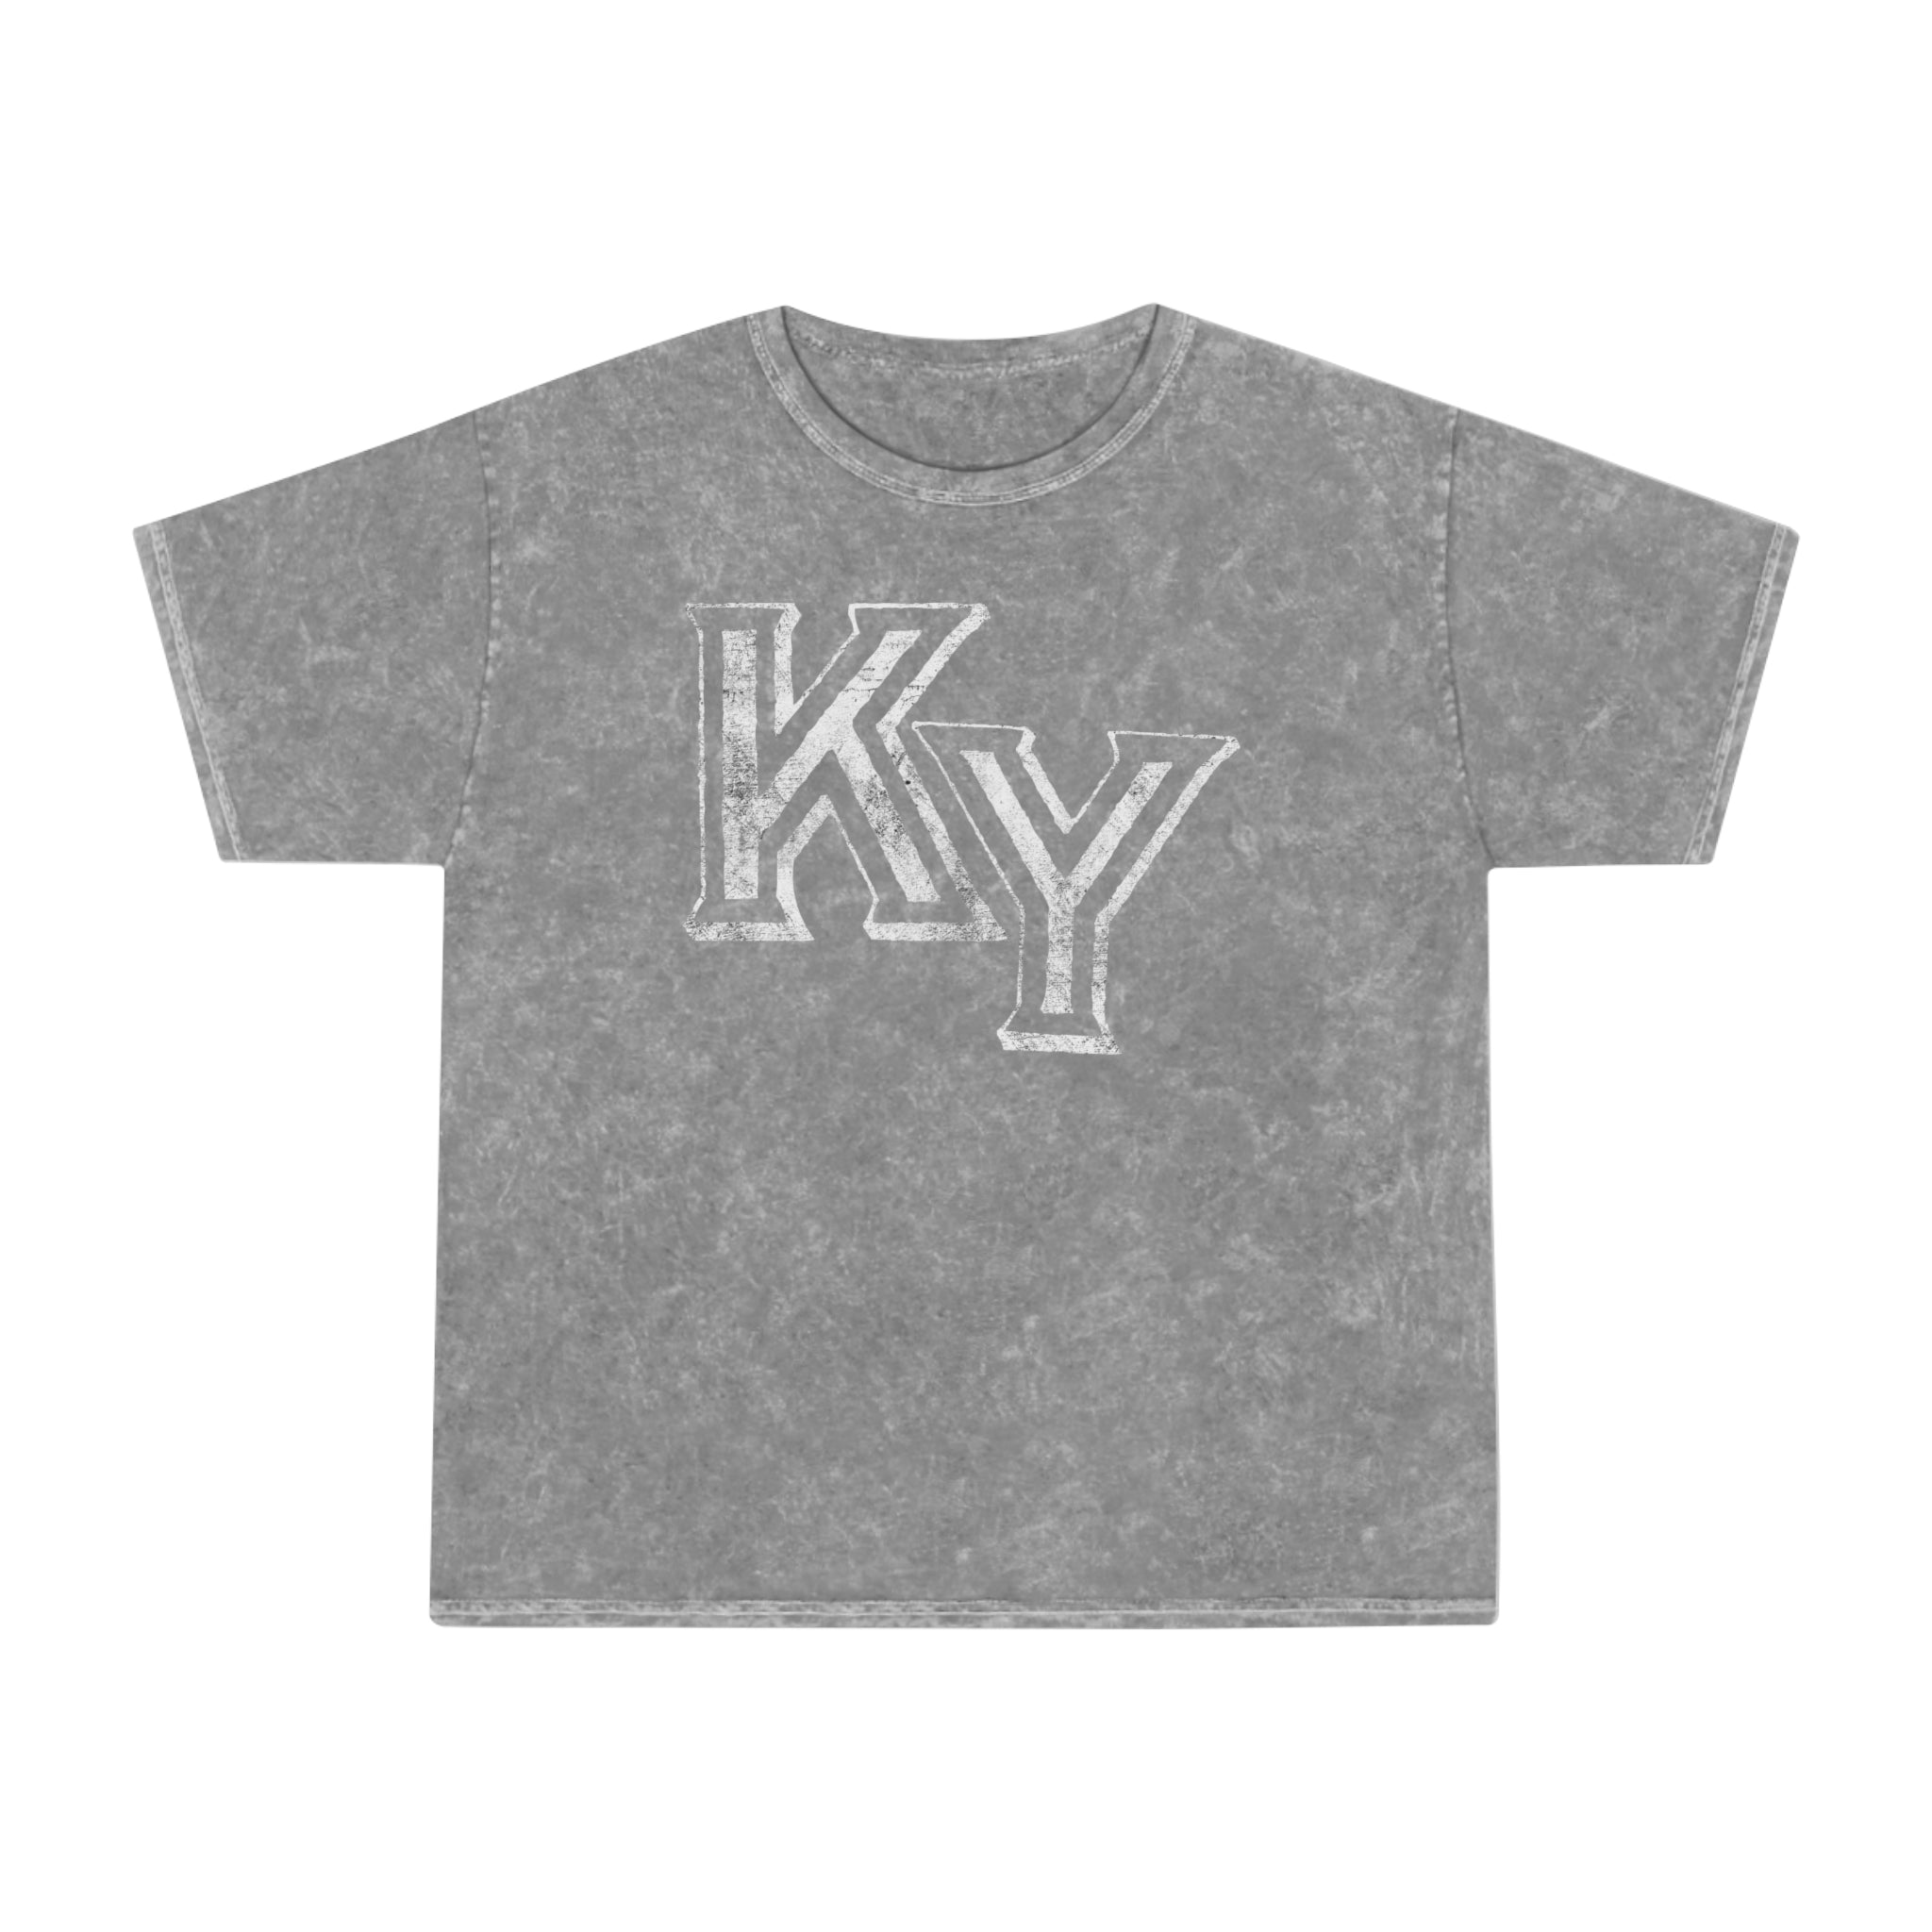 KY Kentucky Gray Grunge Mineral Wash Unisex T-Shirt